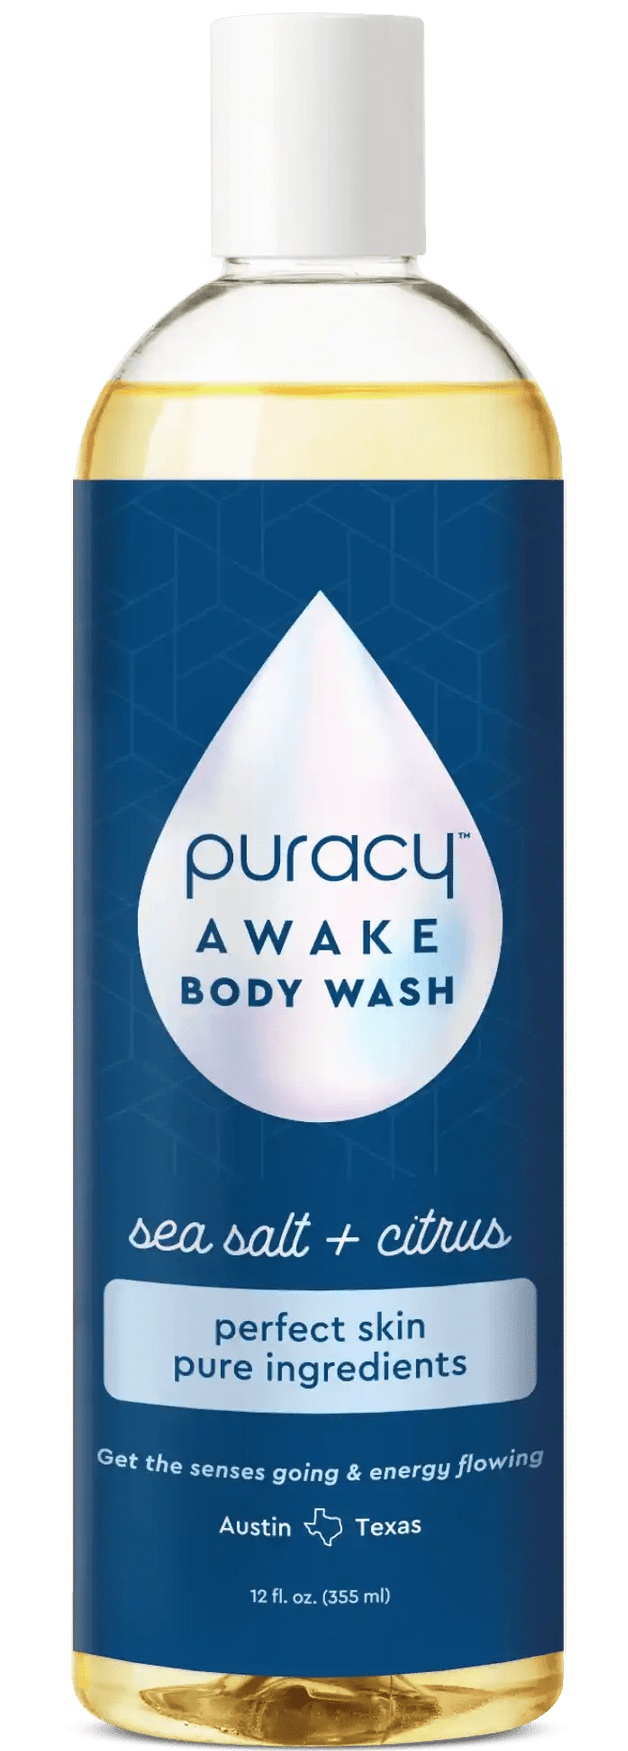 Puracy Awake Body Wash